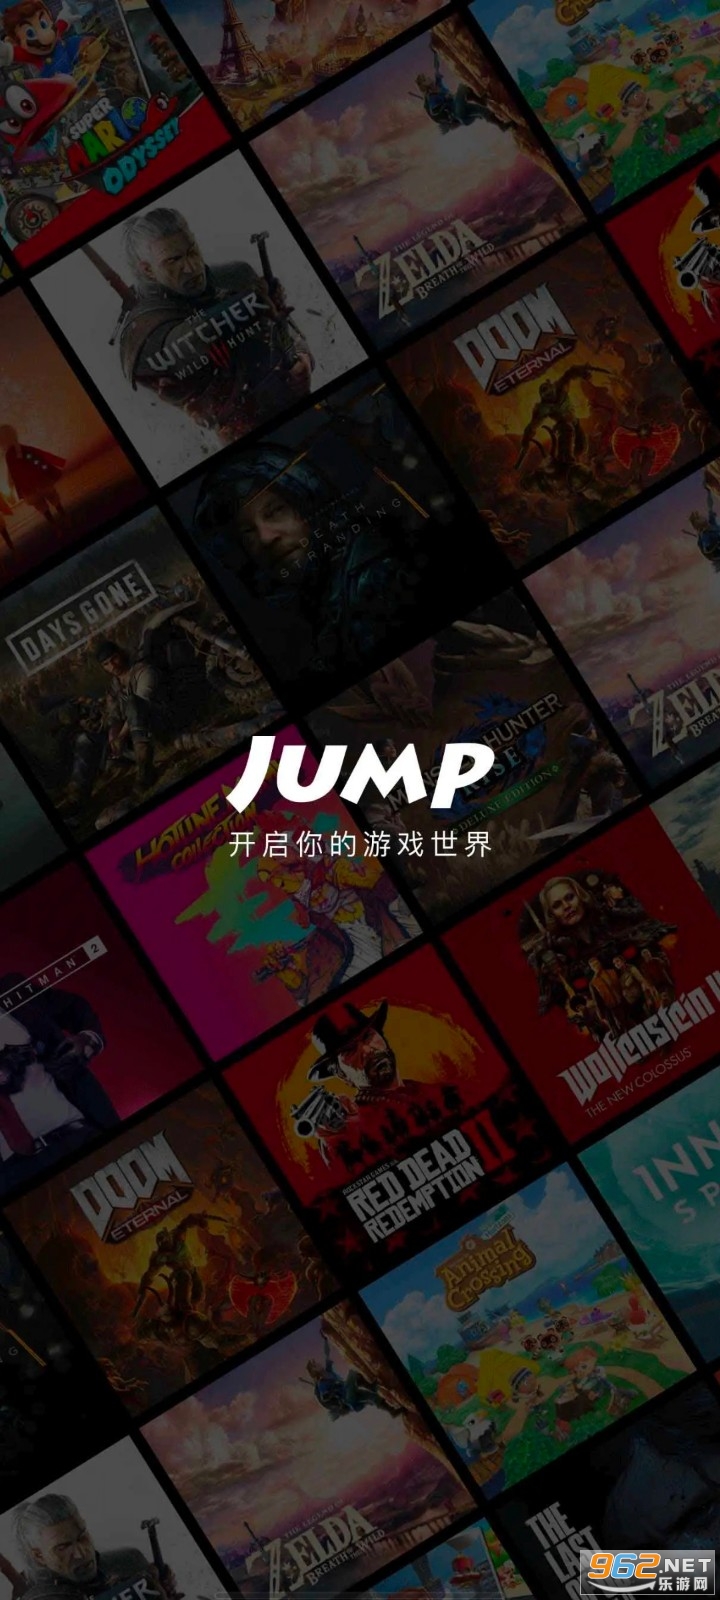 jump app